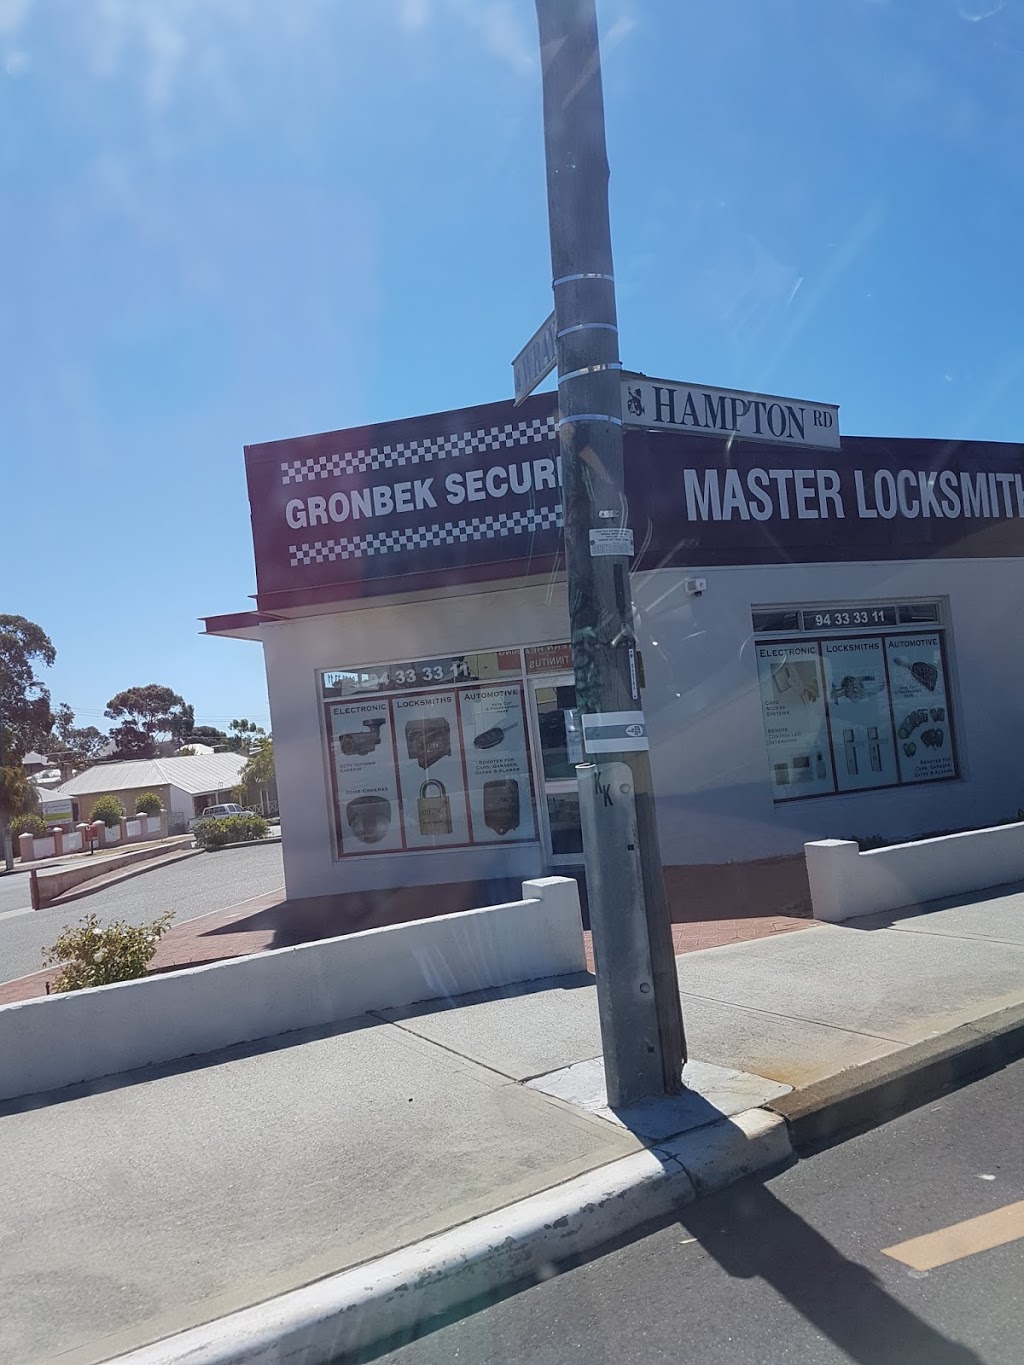 Gronbek Security & Master Locksmith Perth | locksmith | 89 Hampton Rd, Fremantle WA 6160, Australia | 0894333311 OR +61 8 9433 3311